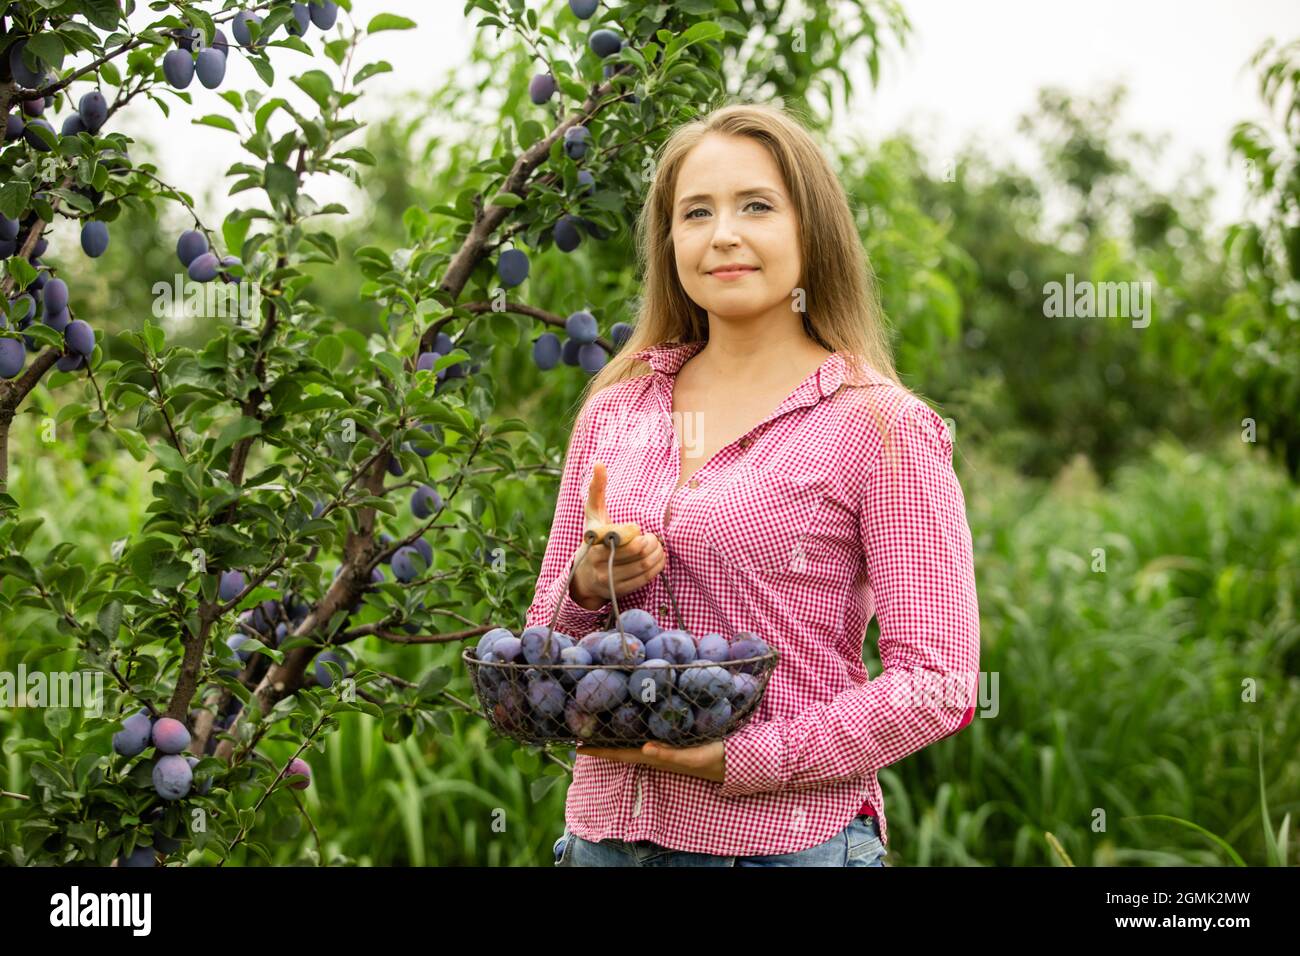 Lächelnde Frau mit Aprikosenkorb im Garten Stockfoto